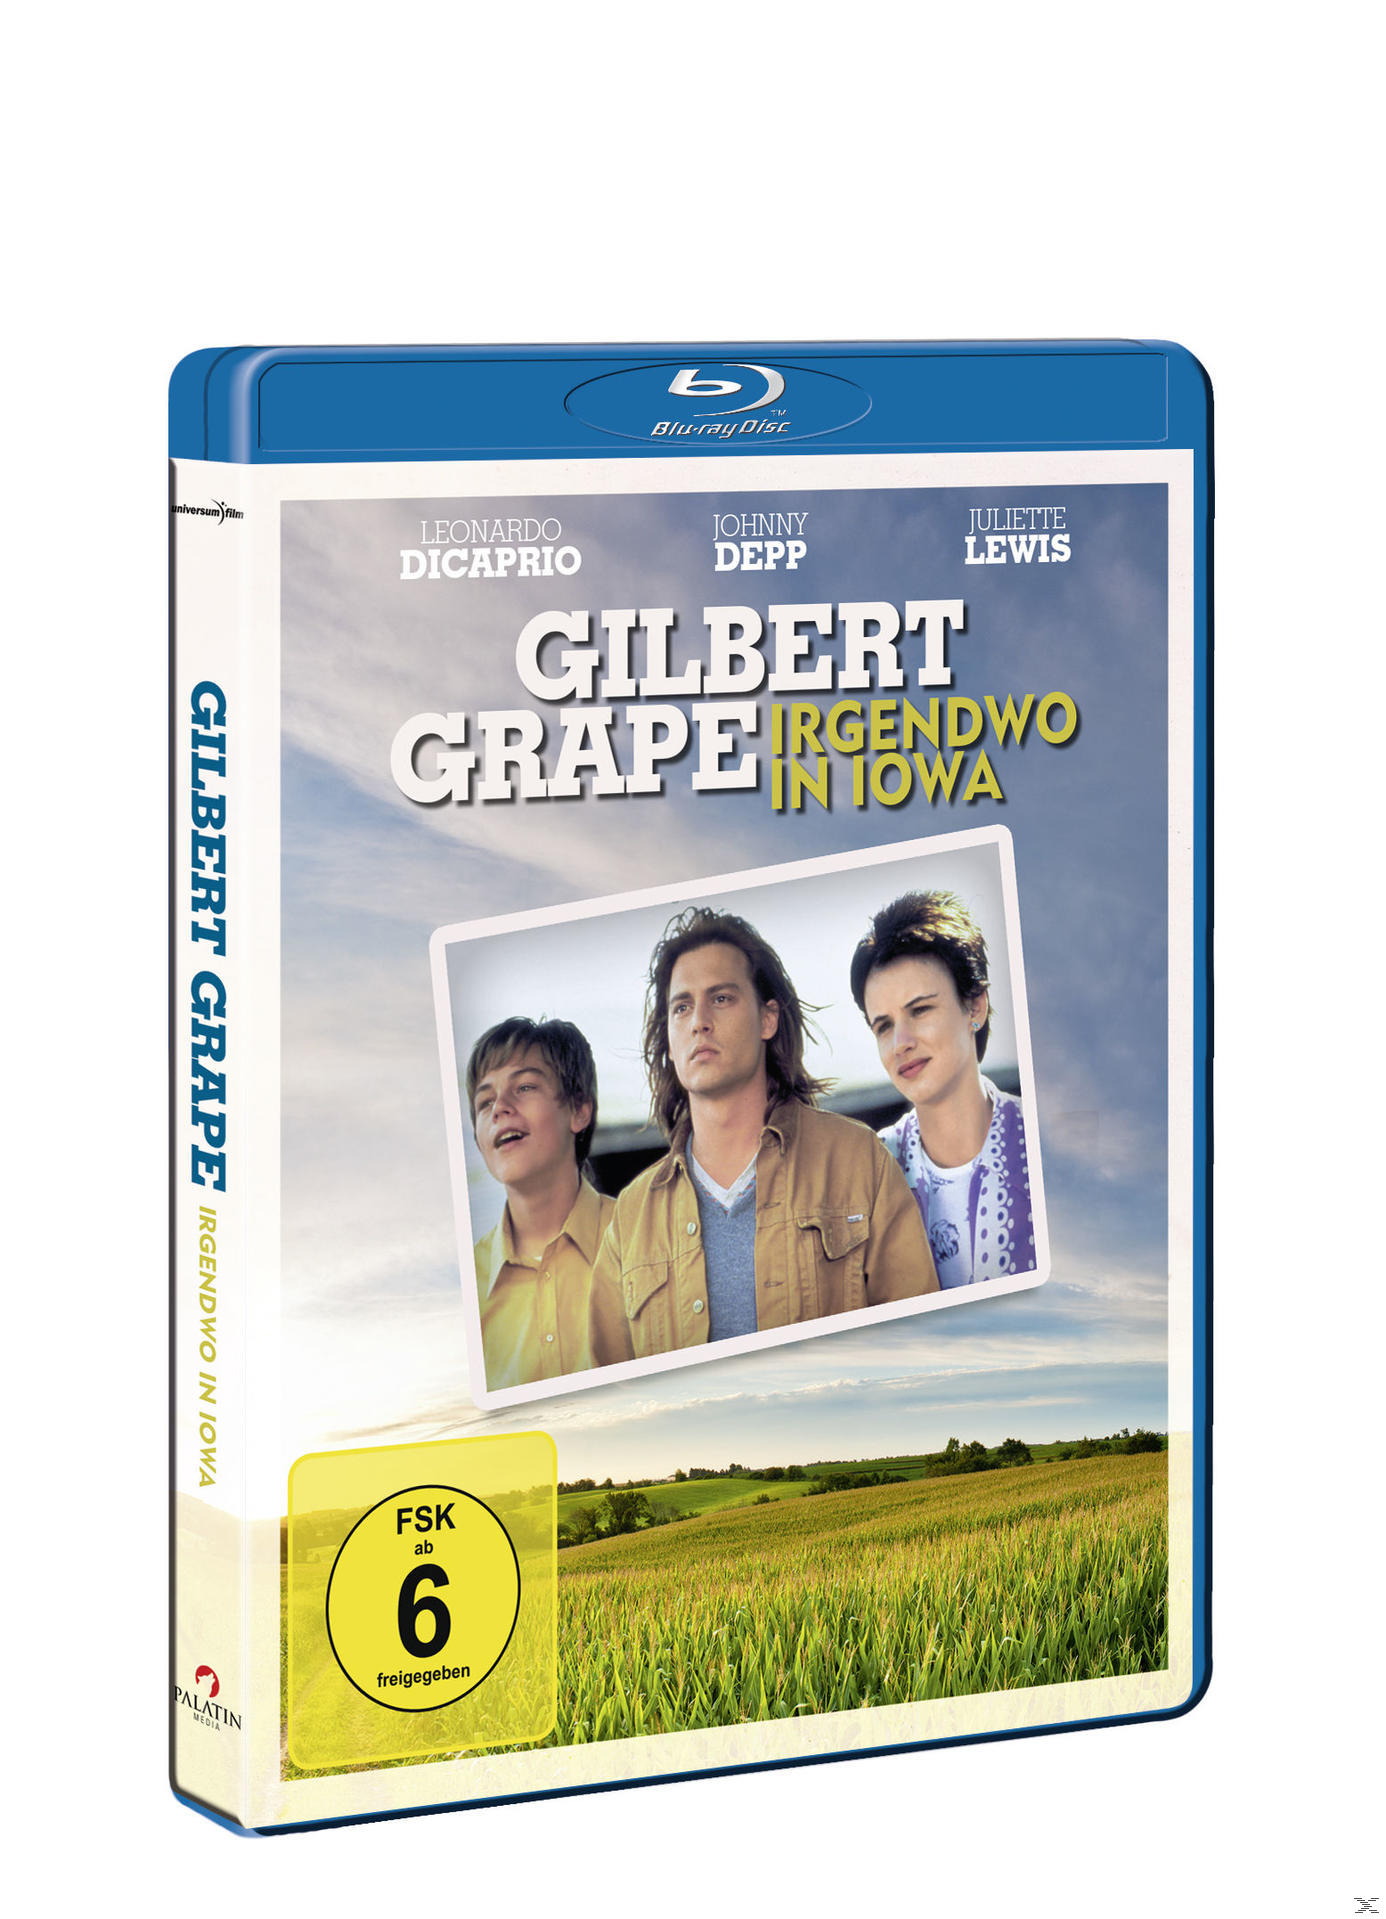 Gilbert Grape - Irgendwo Blu-ray in Iowa